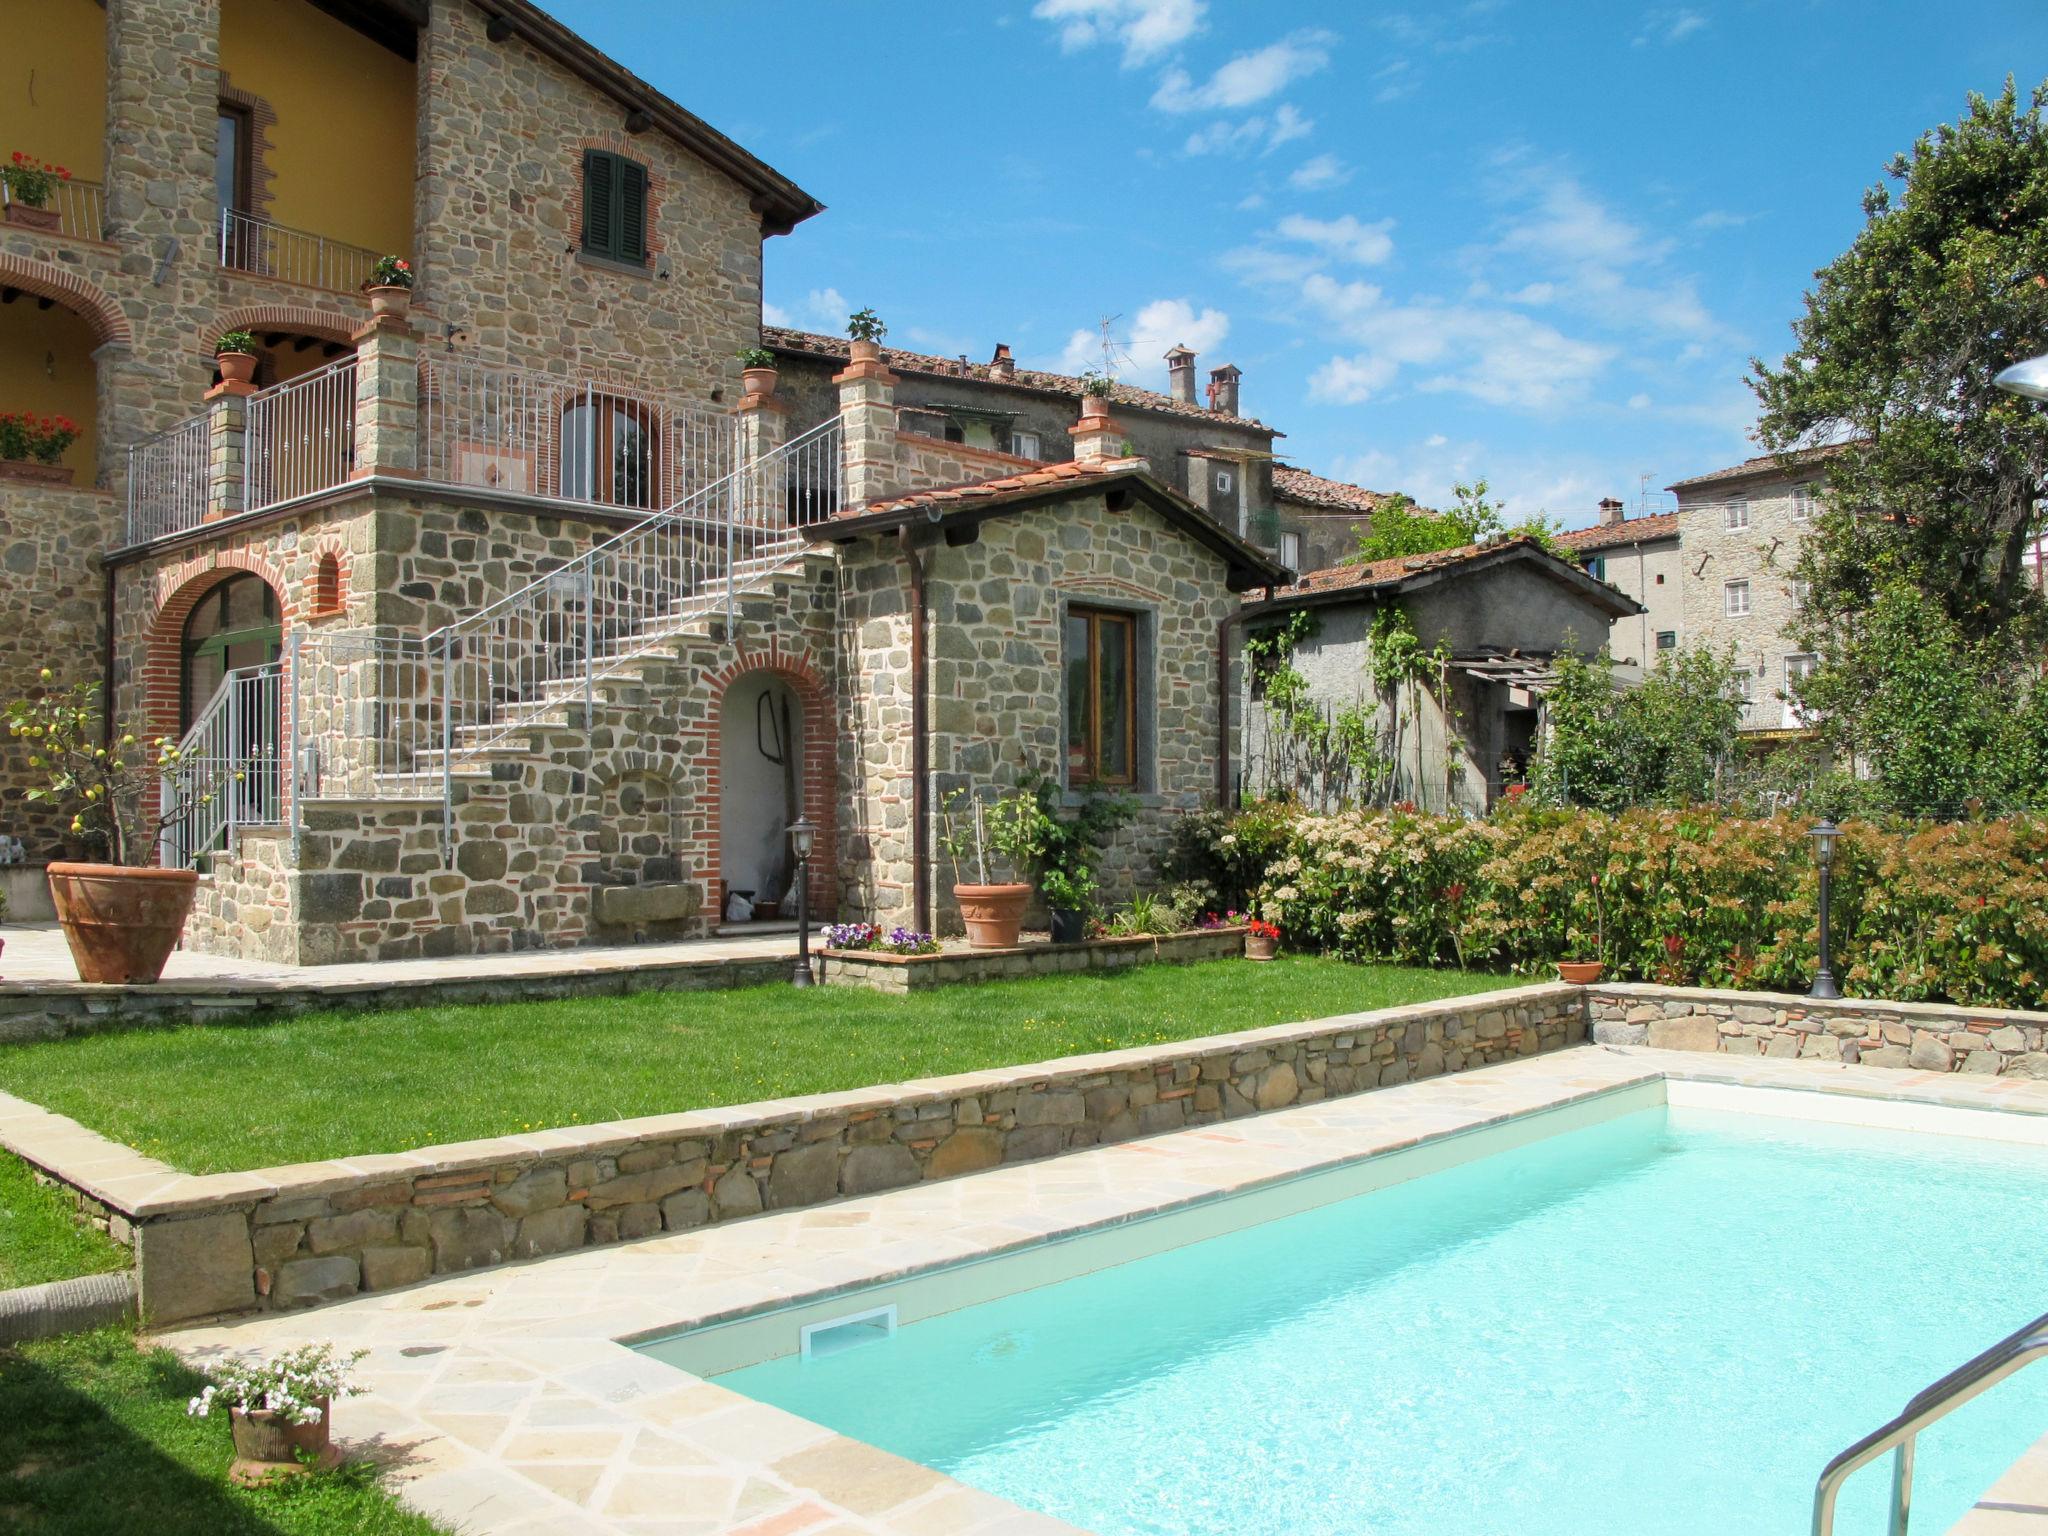 Foto 1 - Apartment mit 2 Schlafzimmern in Bagni di Lucca mit privater pool und terrasse